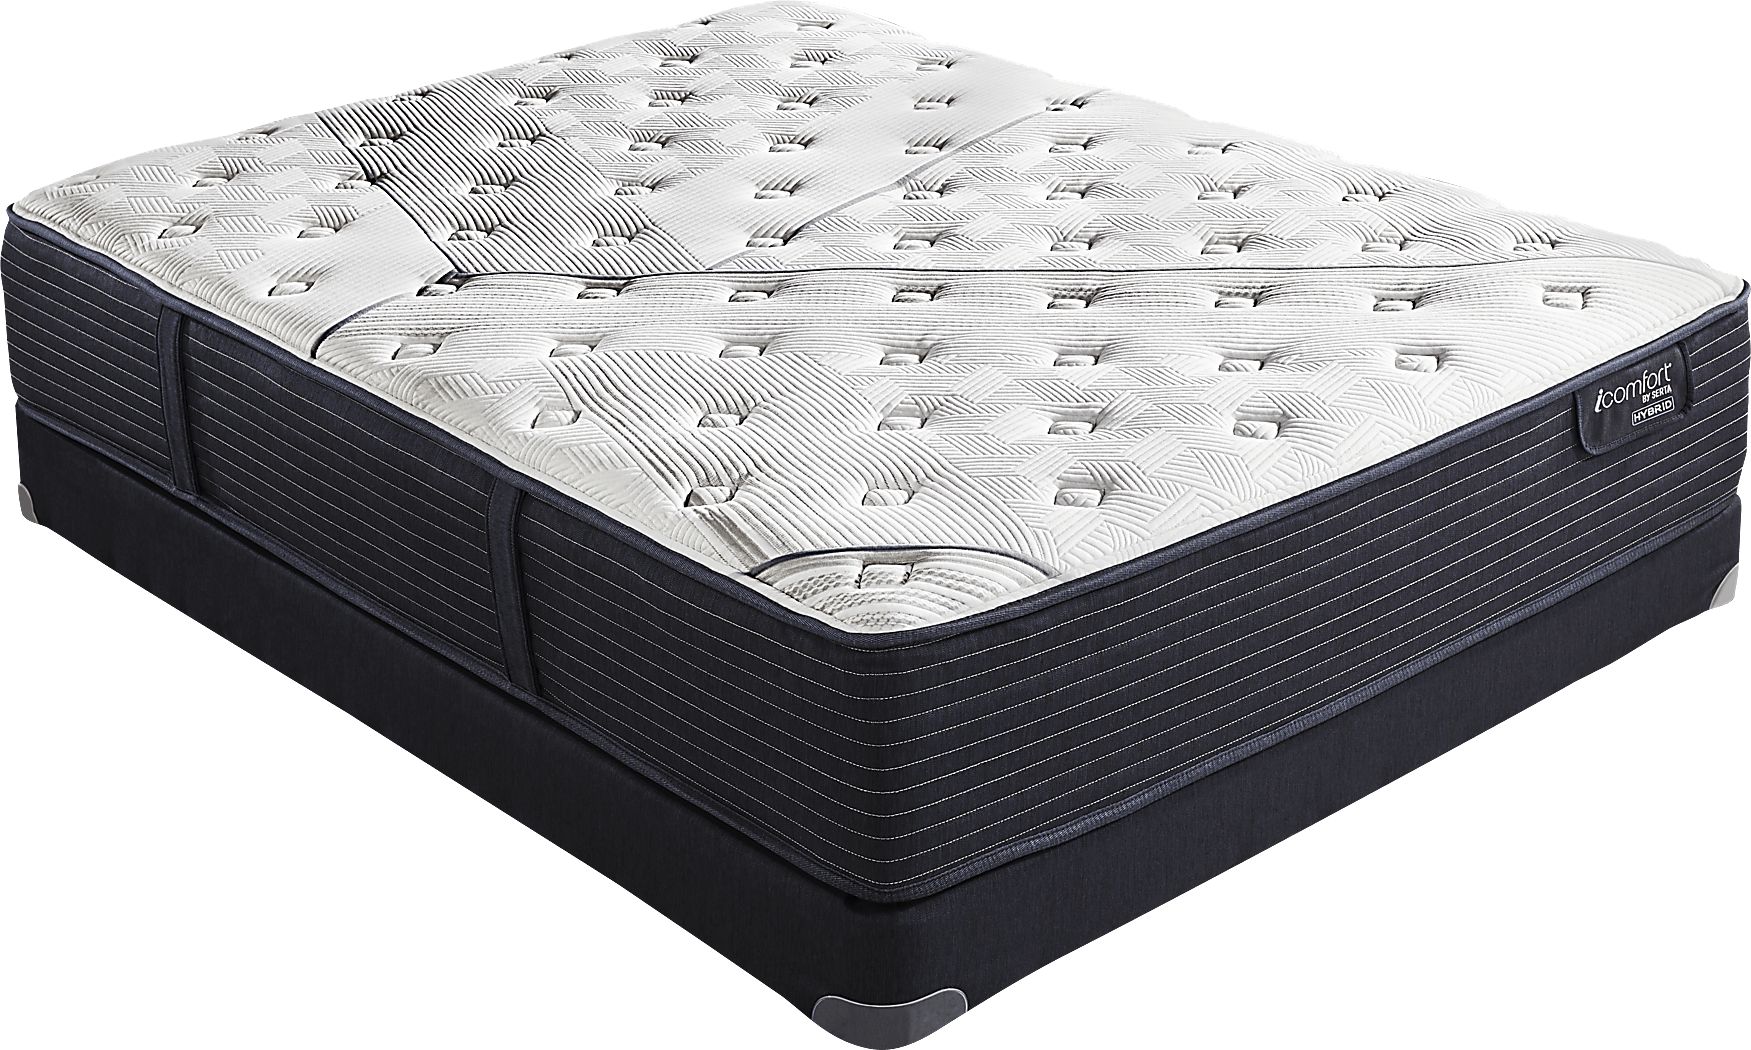 icomfort mattress low profile box spring